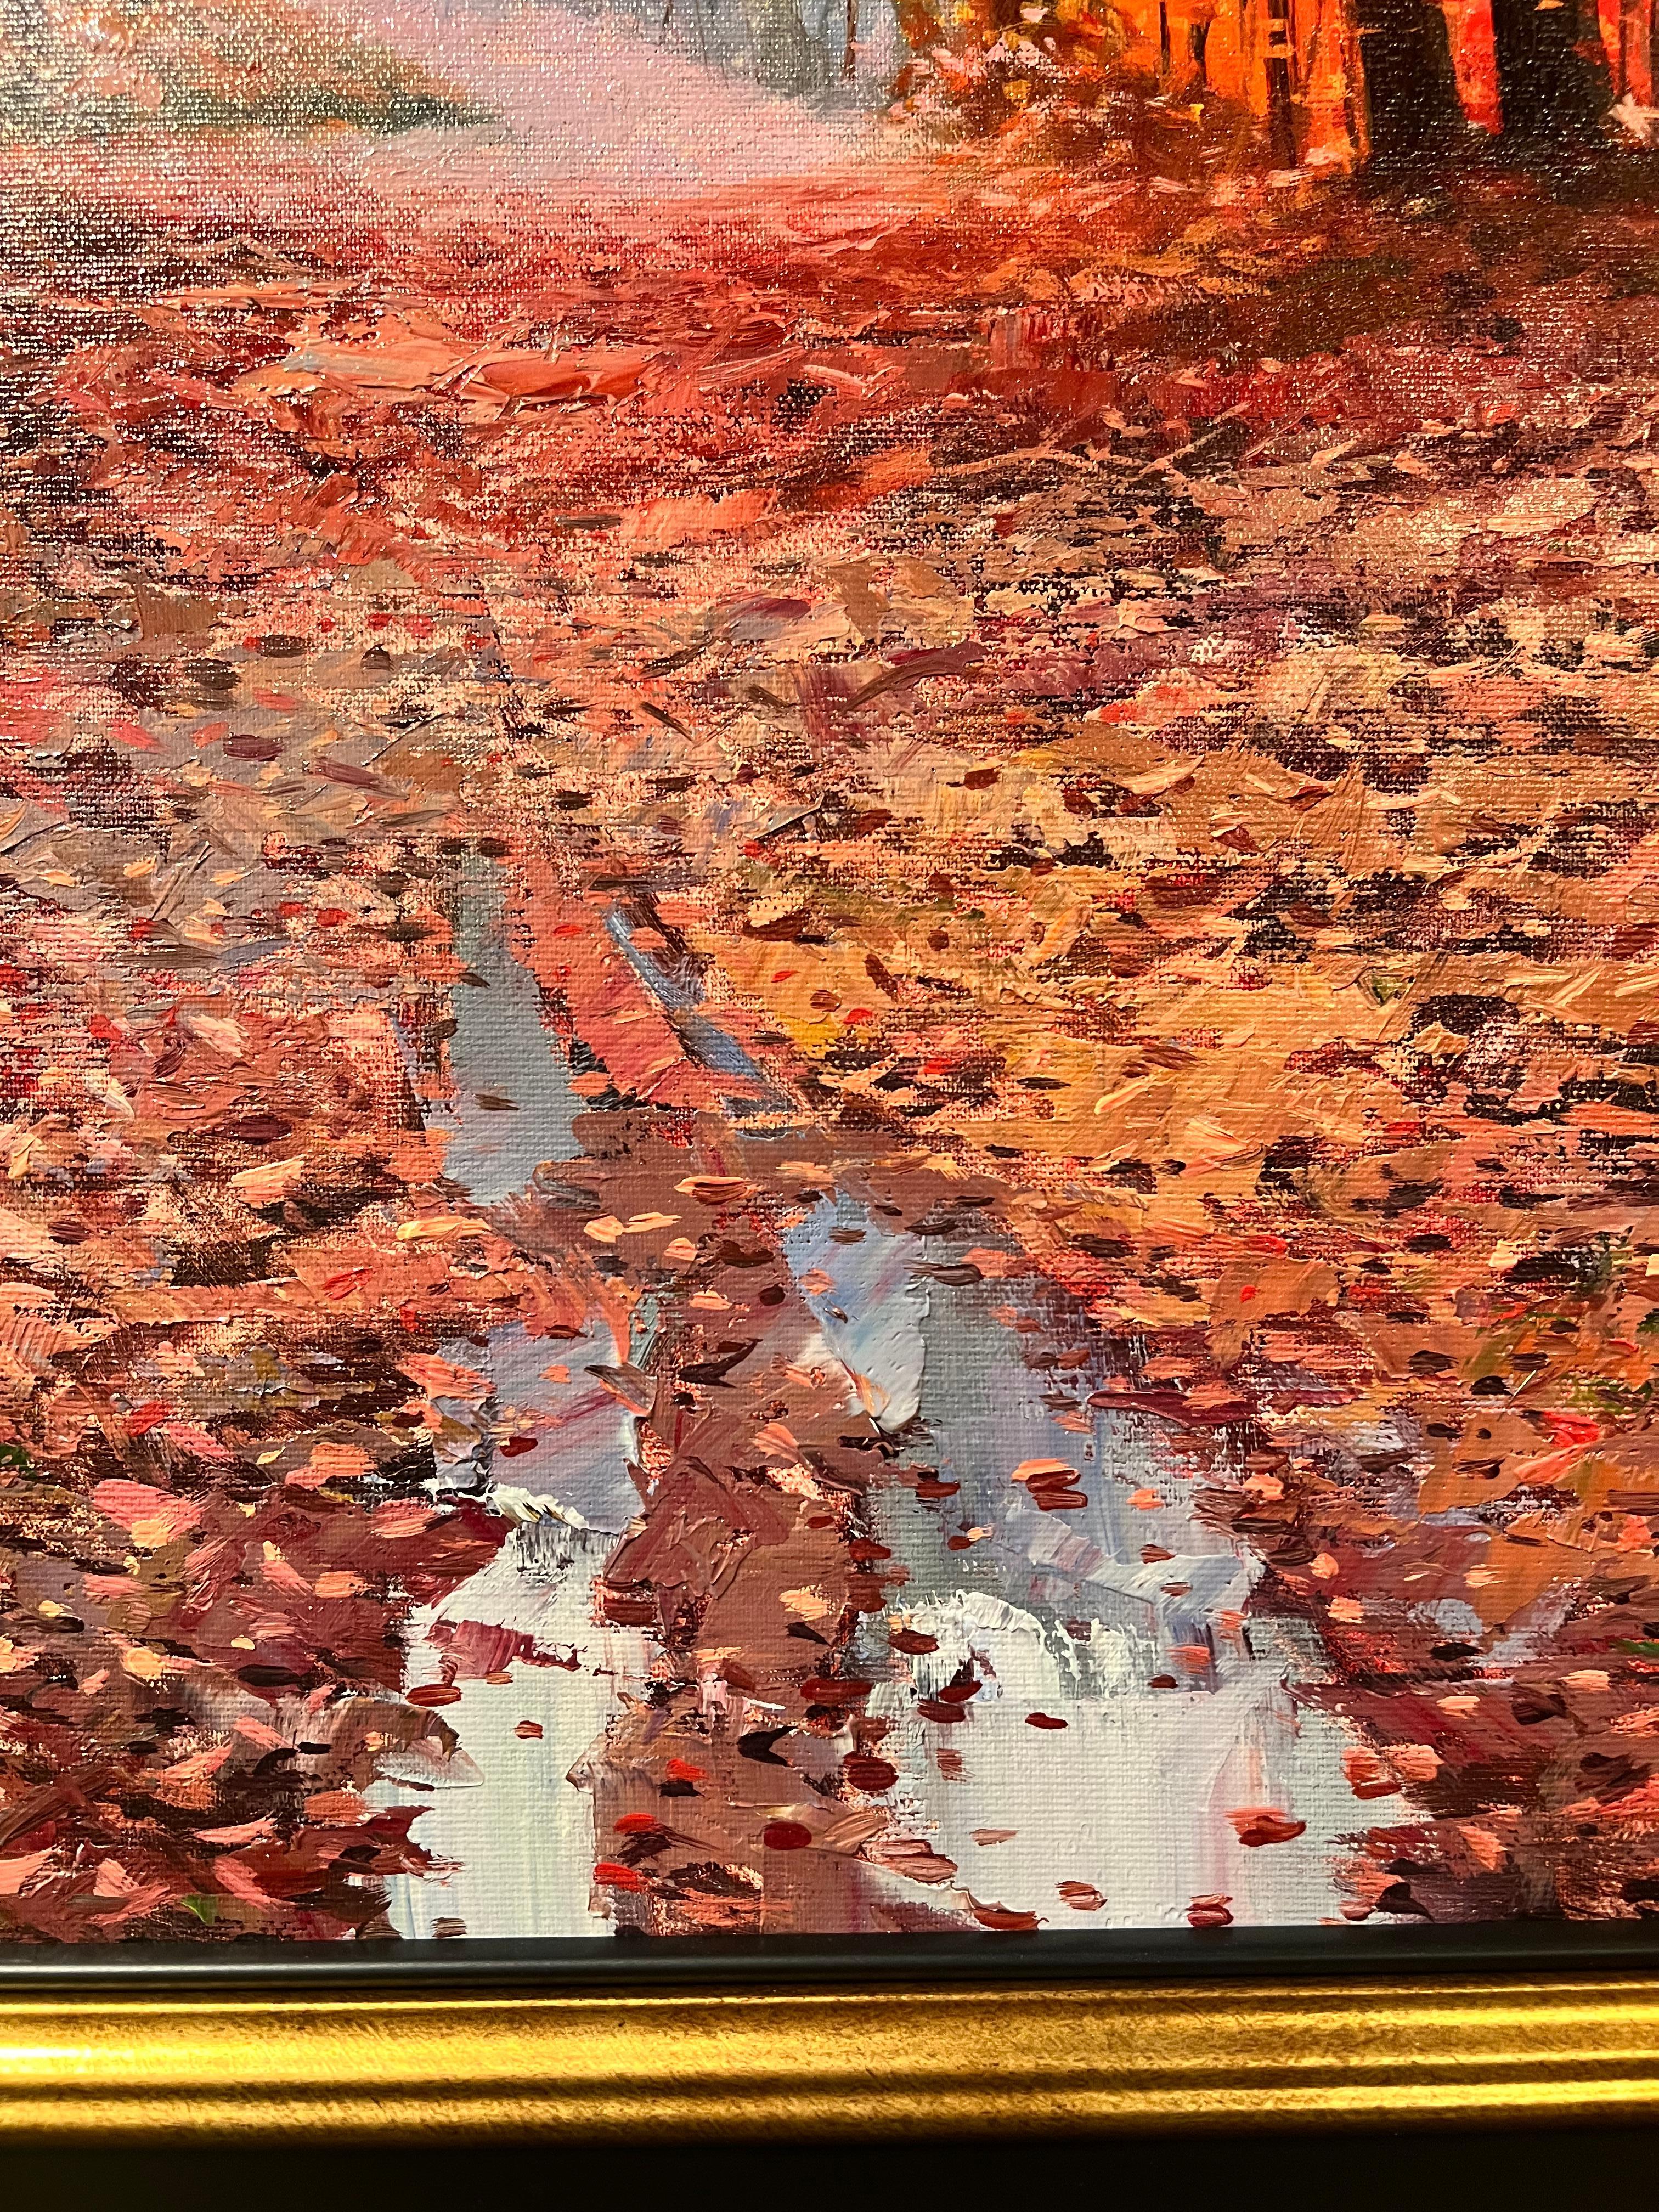 Frondosidad Otonal (Autumn Lushness) - Painting by Miguel Peidro